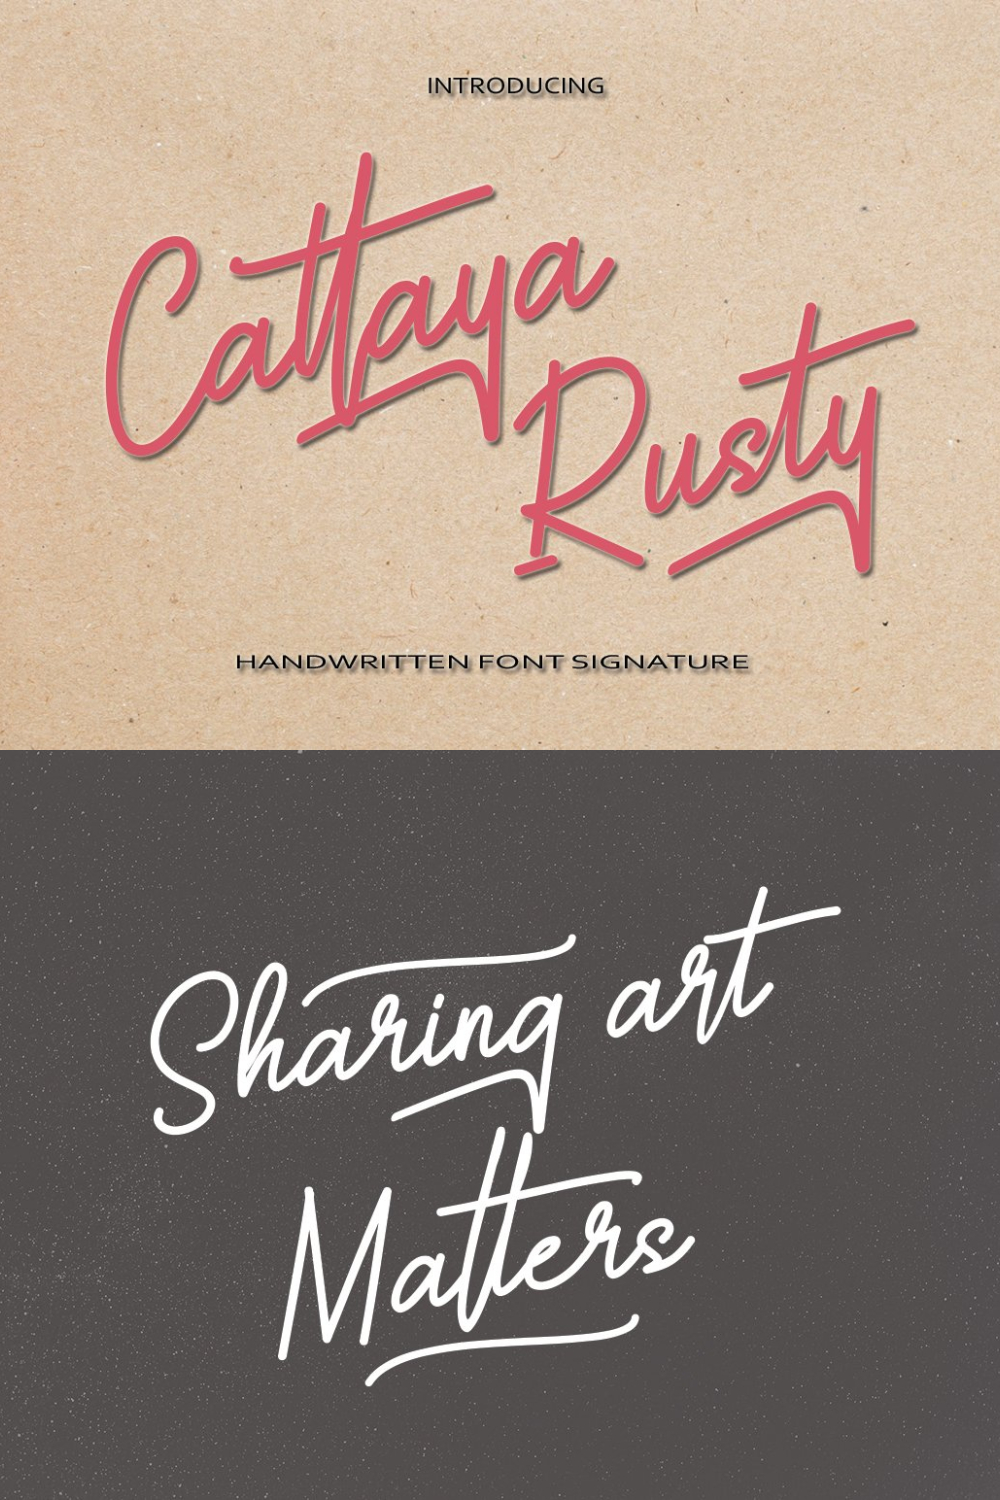 Cattaya Rusty - Pinterest.